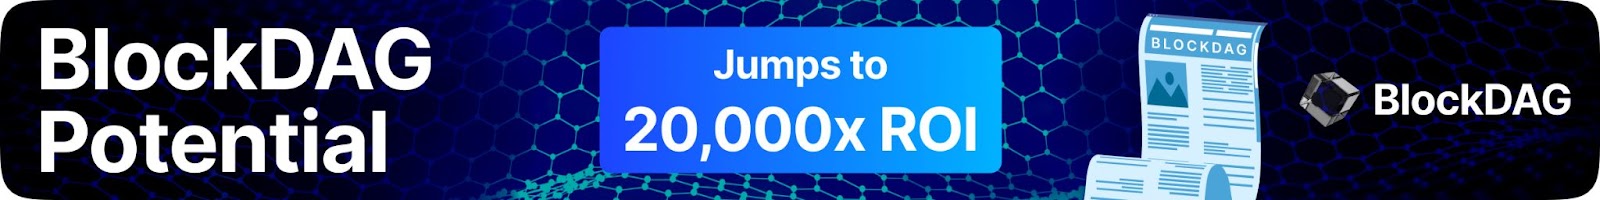 Blockdag potential jumps to 20,000x ROI